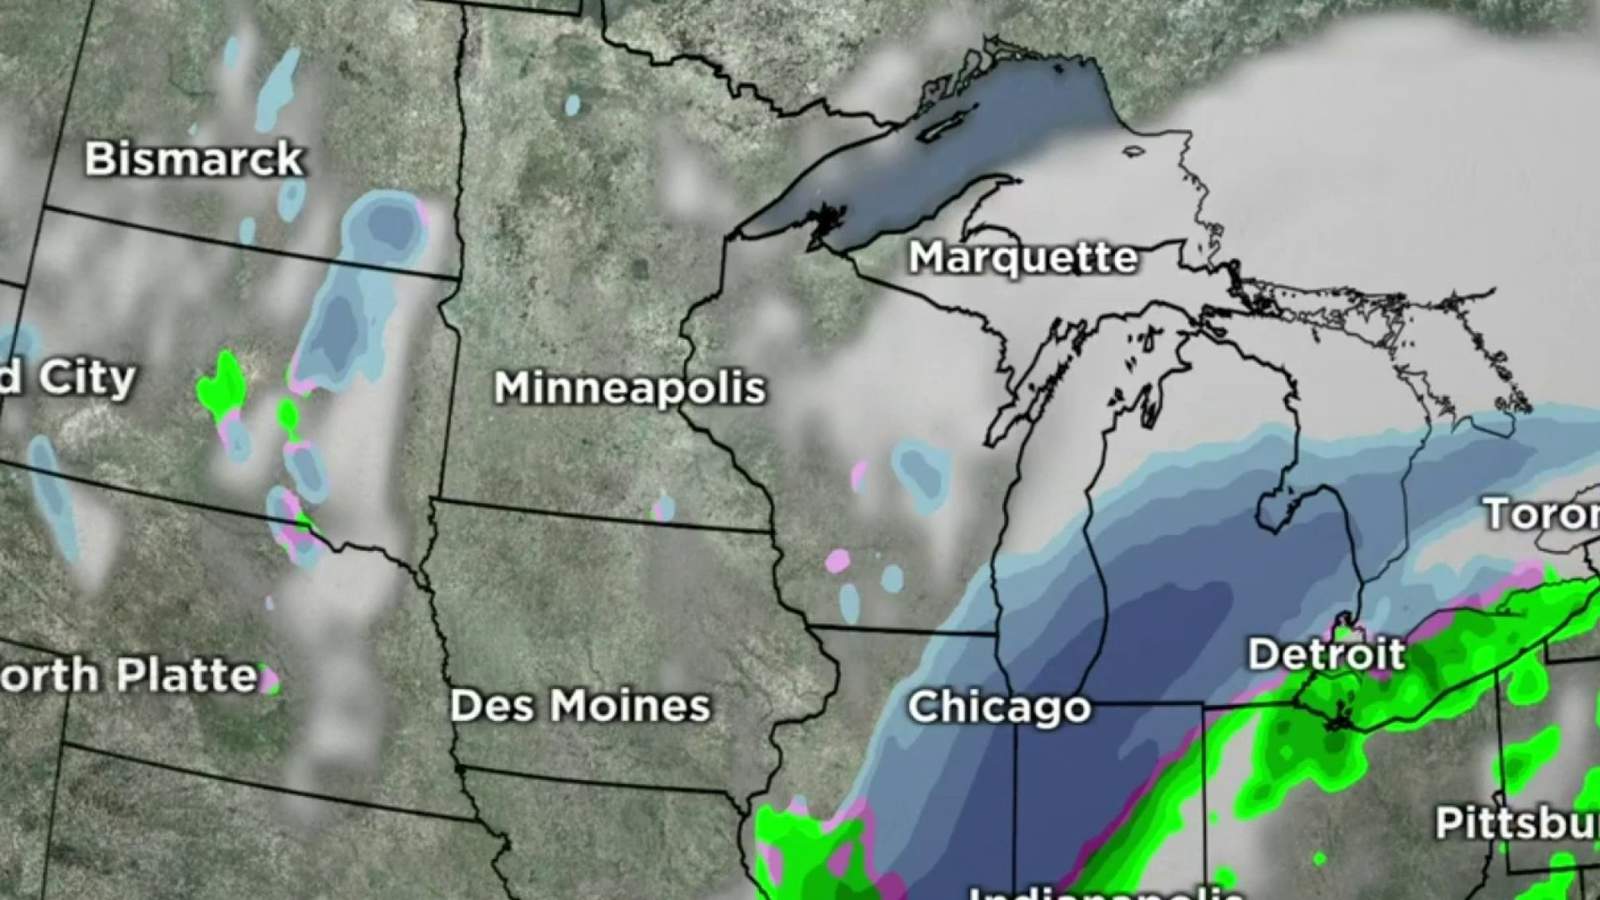 Metro Detroit weather: A few sprinkles Saturday night, higher temps Sunday, falling snow next week